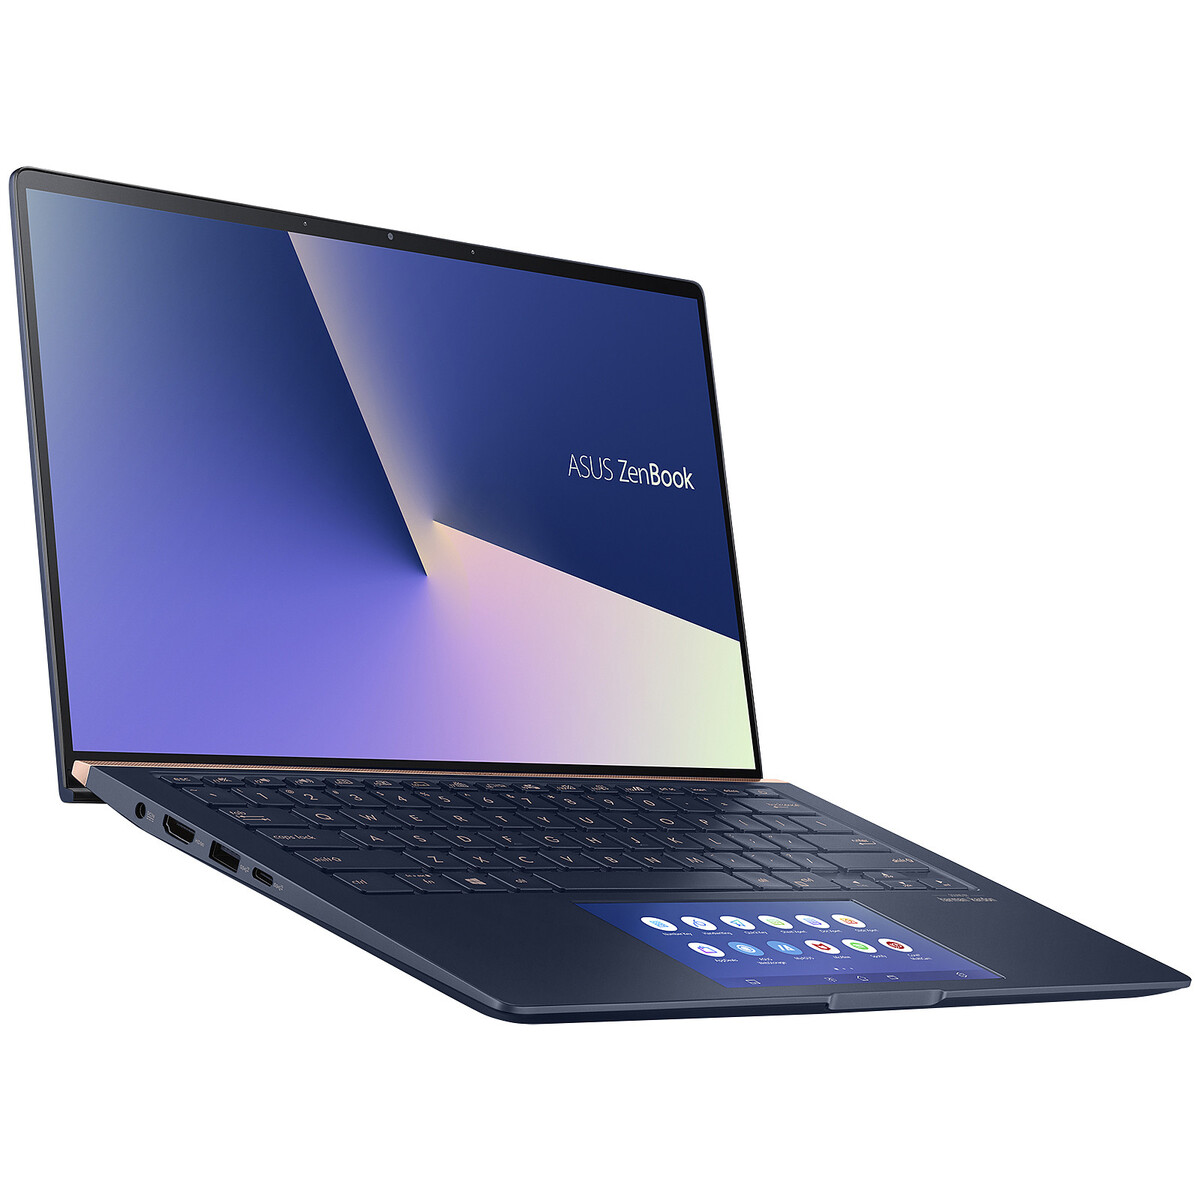 A Closer Look at the ASUS ZenBook Laptop Series插图4